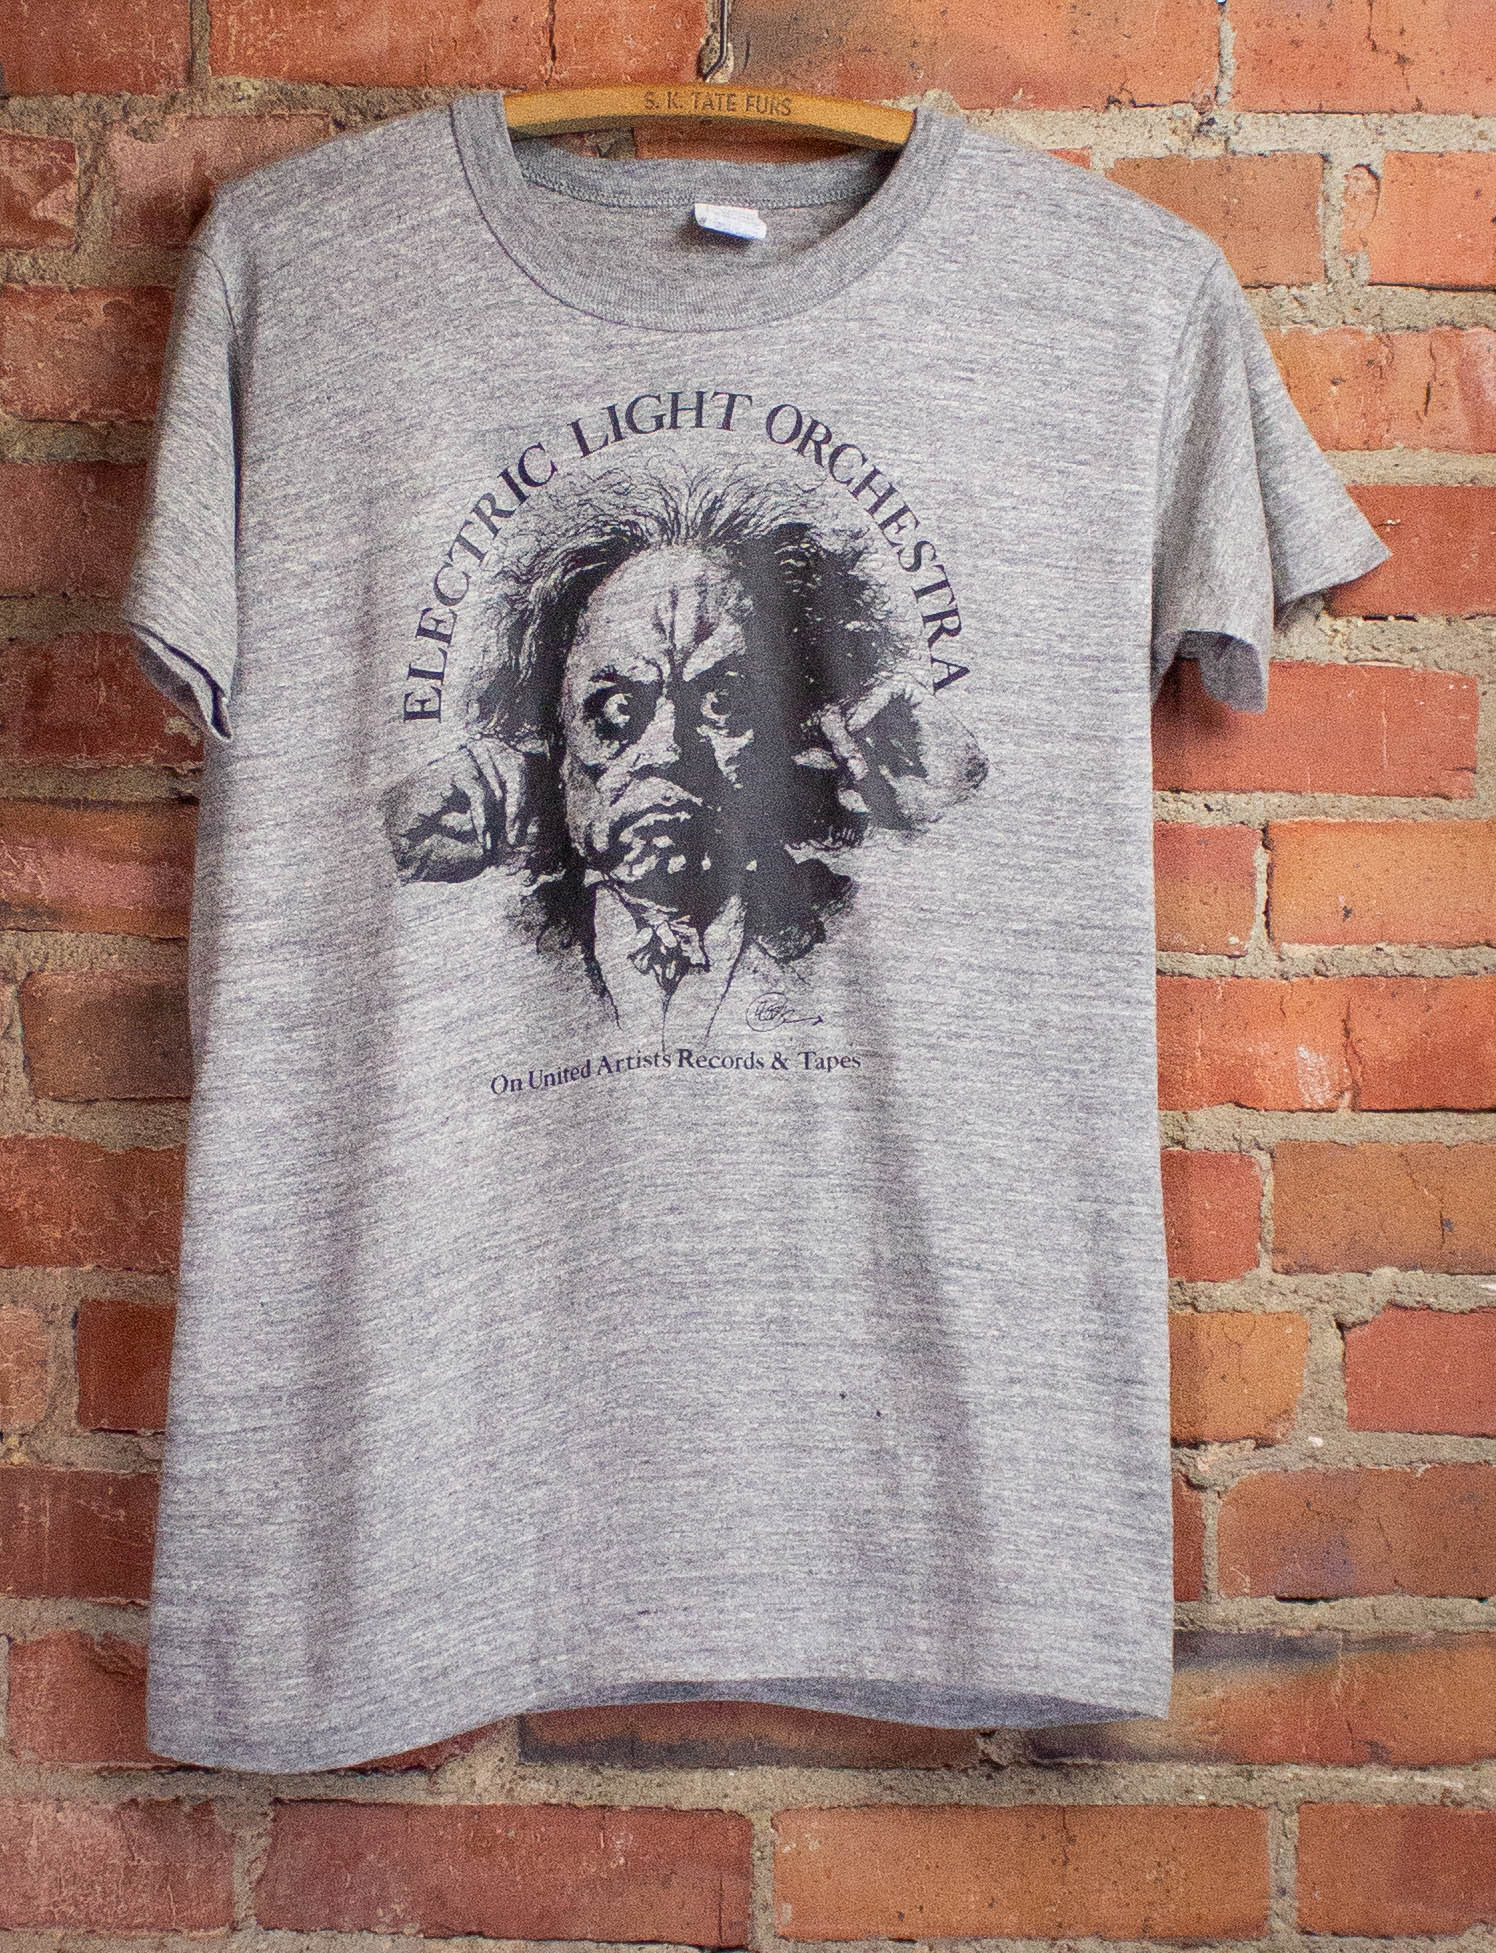 Vintage Electric Light Orchestra 1971 Promo Concert T-Shirt S